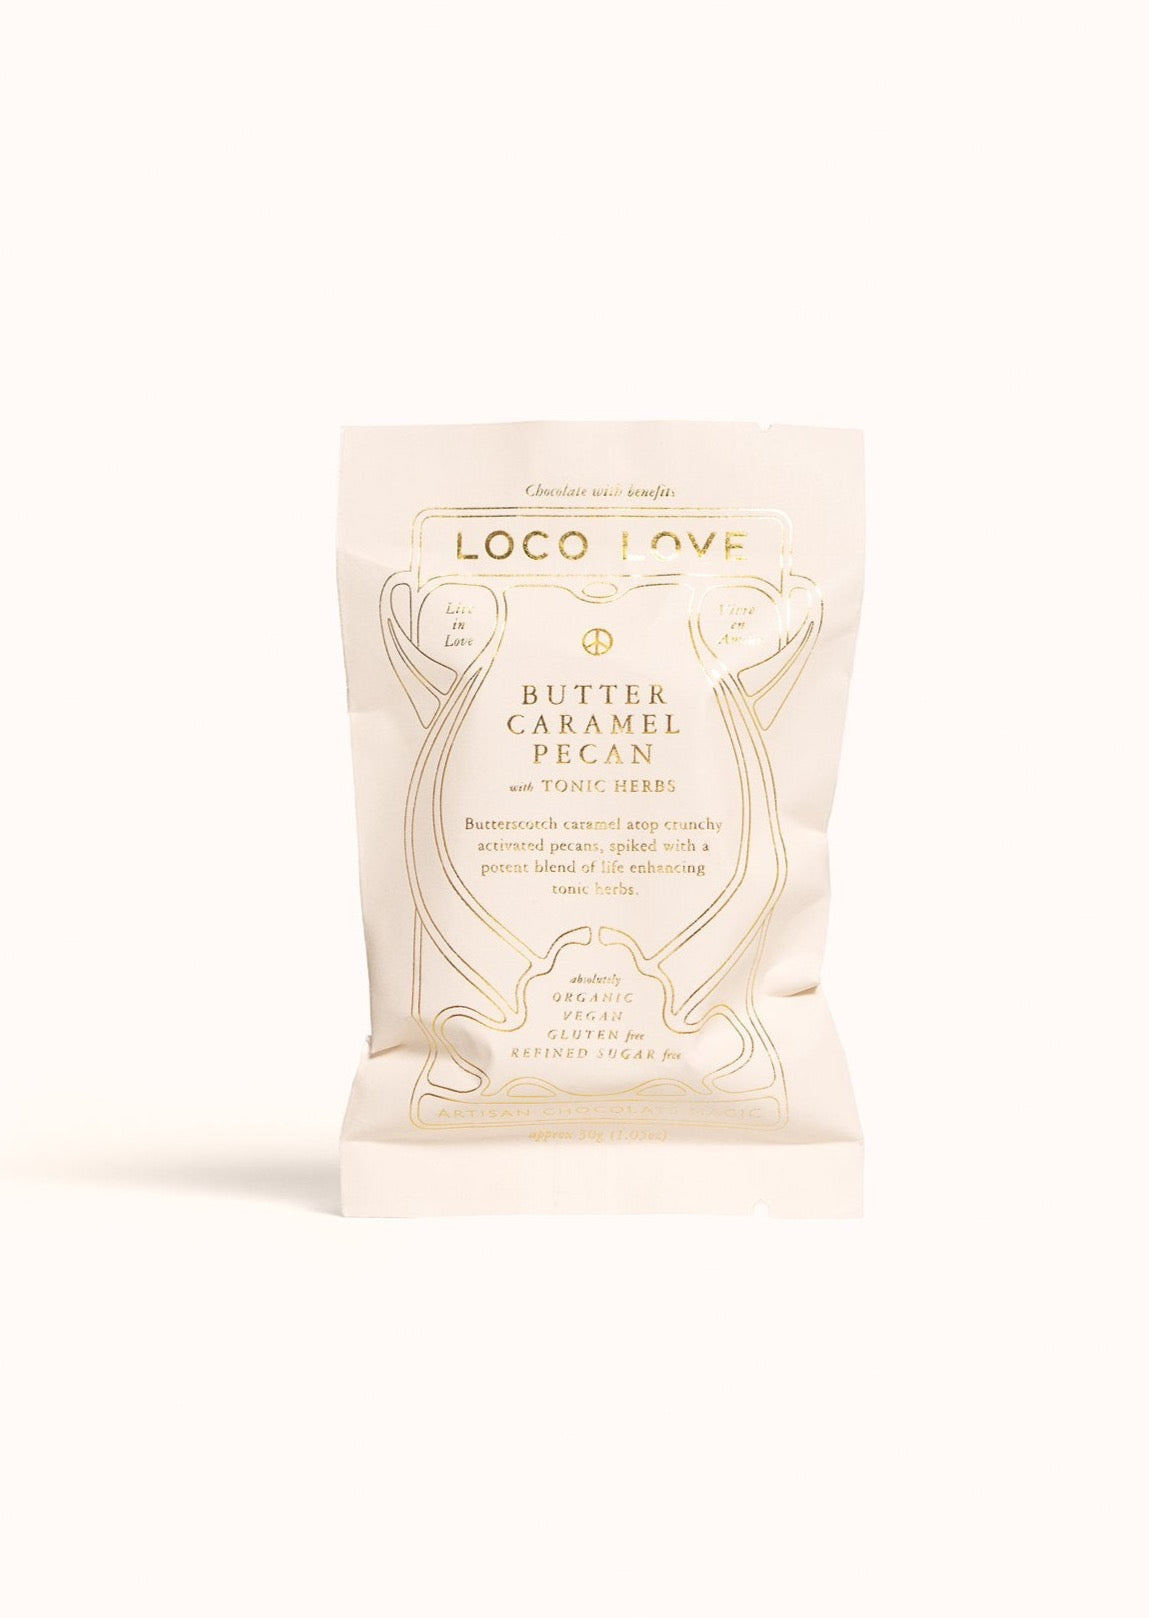 Loco Love Twin Butter Caramel Pecan